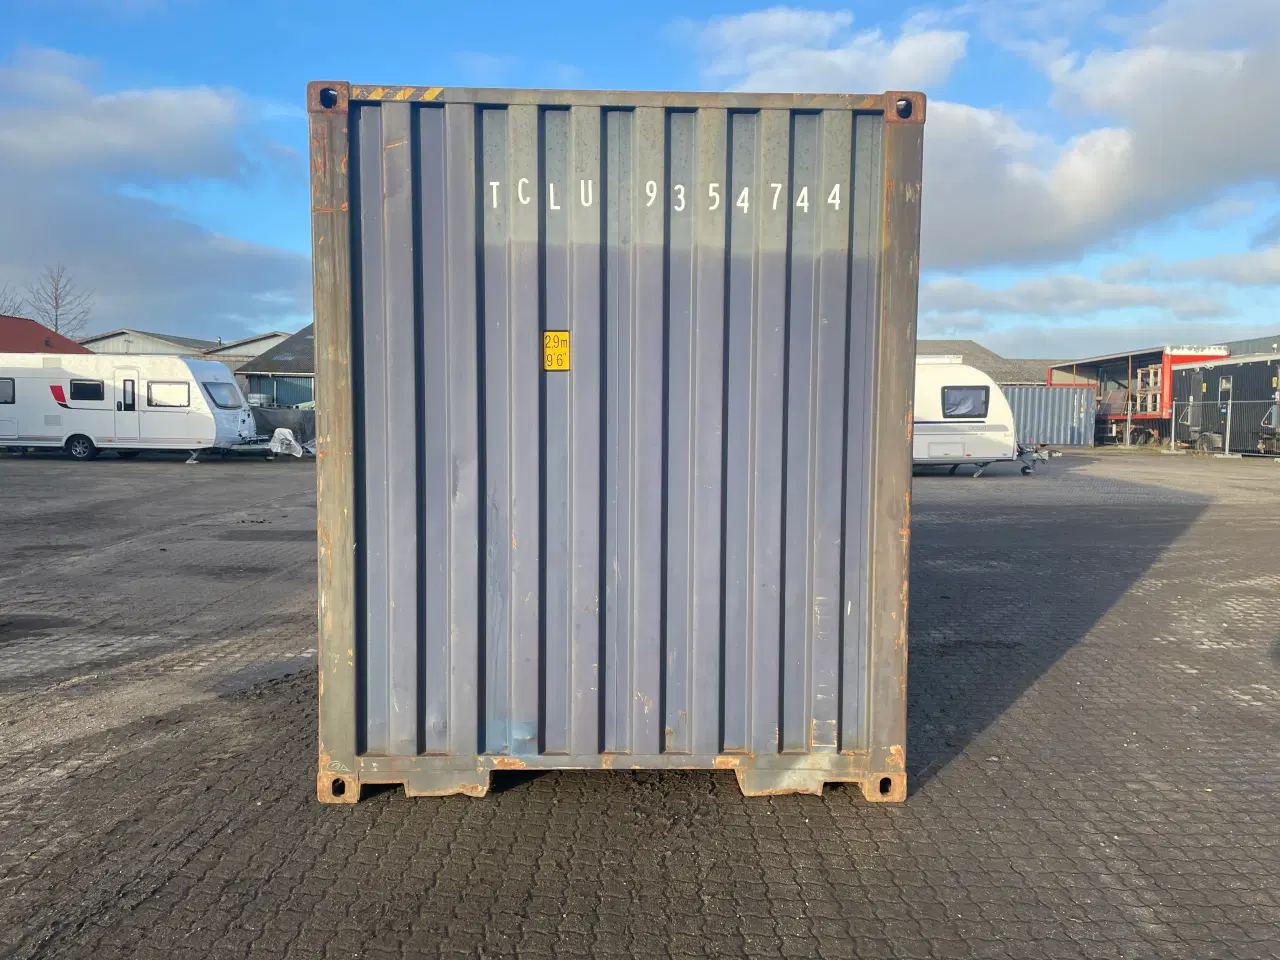 Billede 4 - 40 fods HC Container - ID: TCLU 935474-4